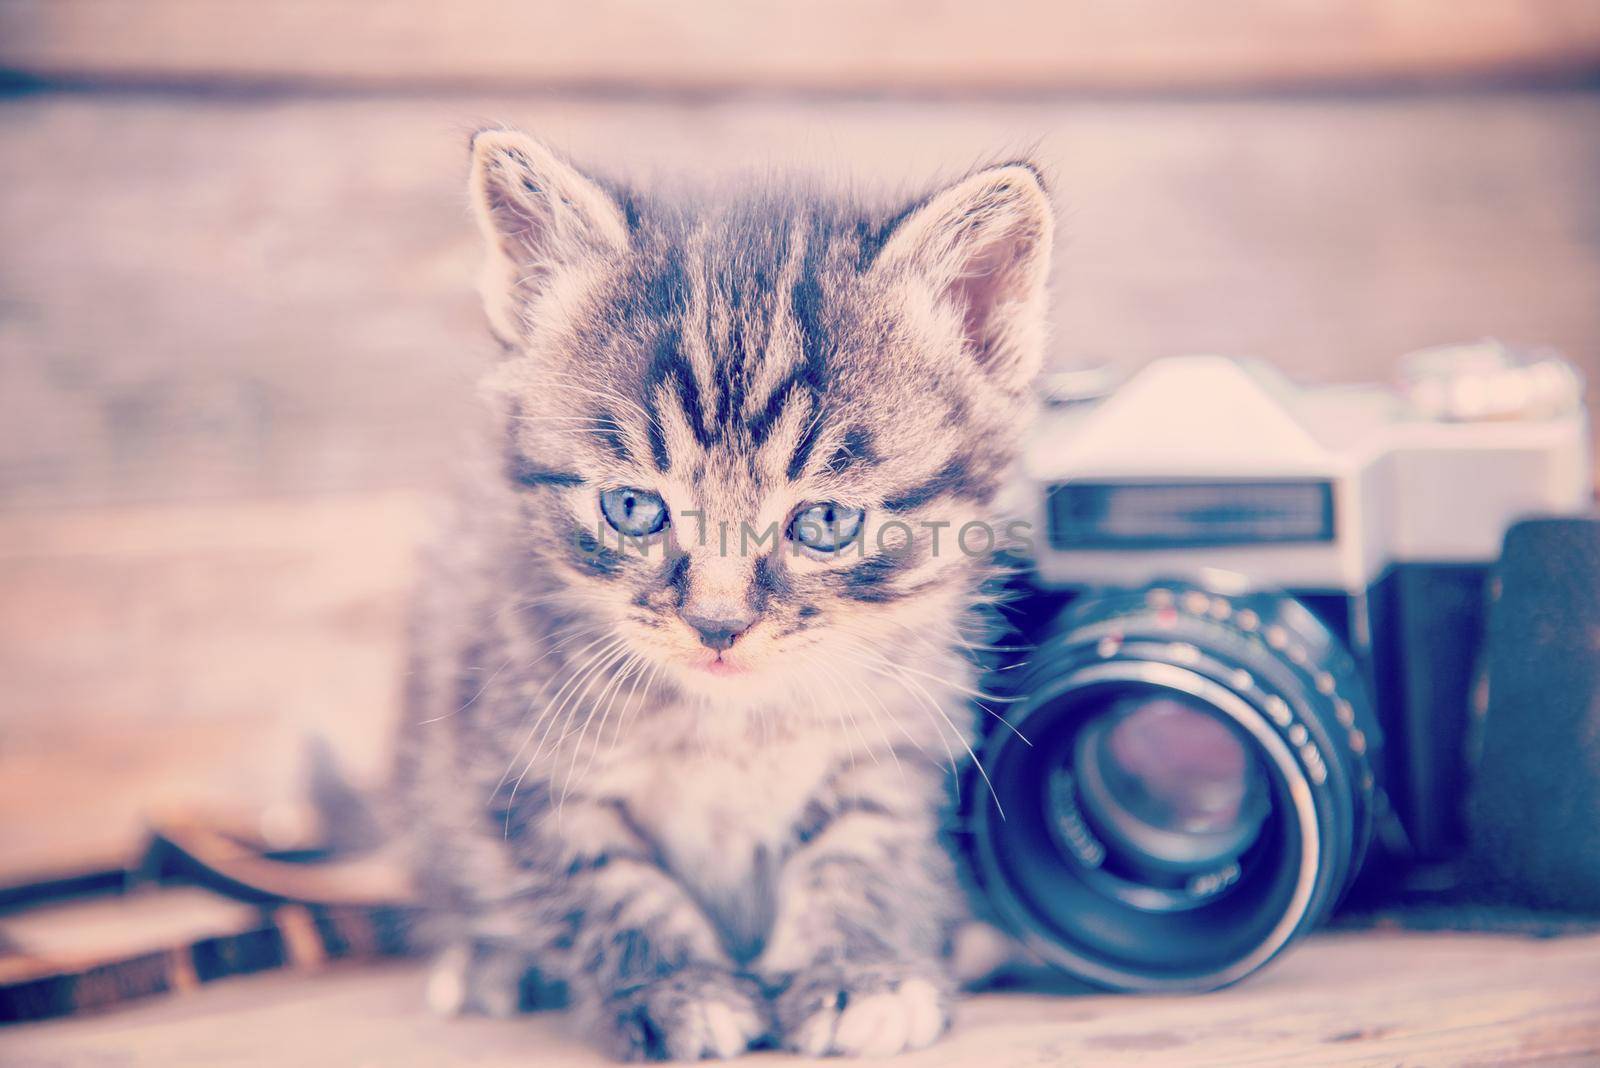 Kitten with vintage photo camera by alexAleksei